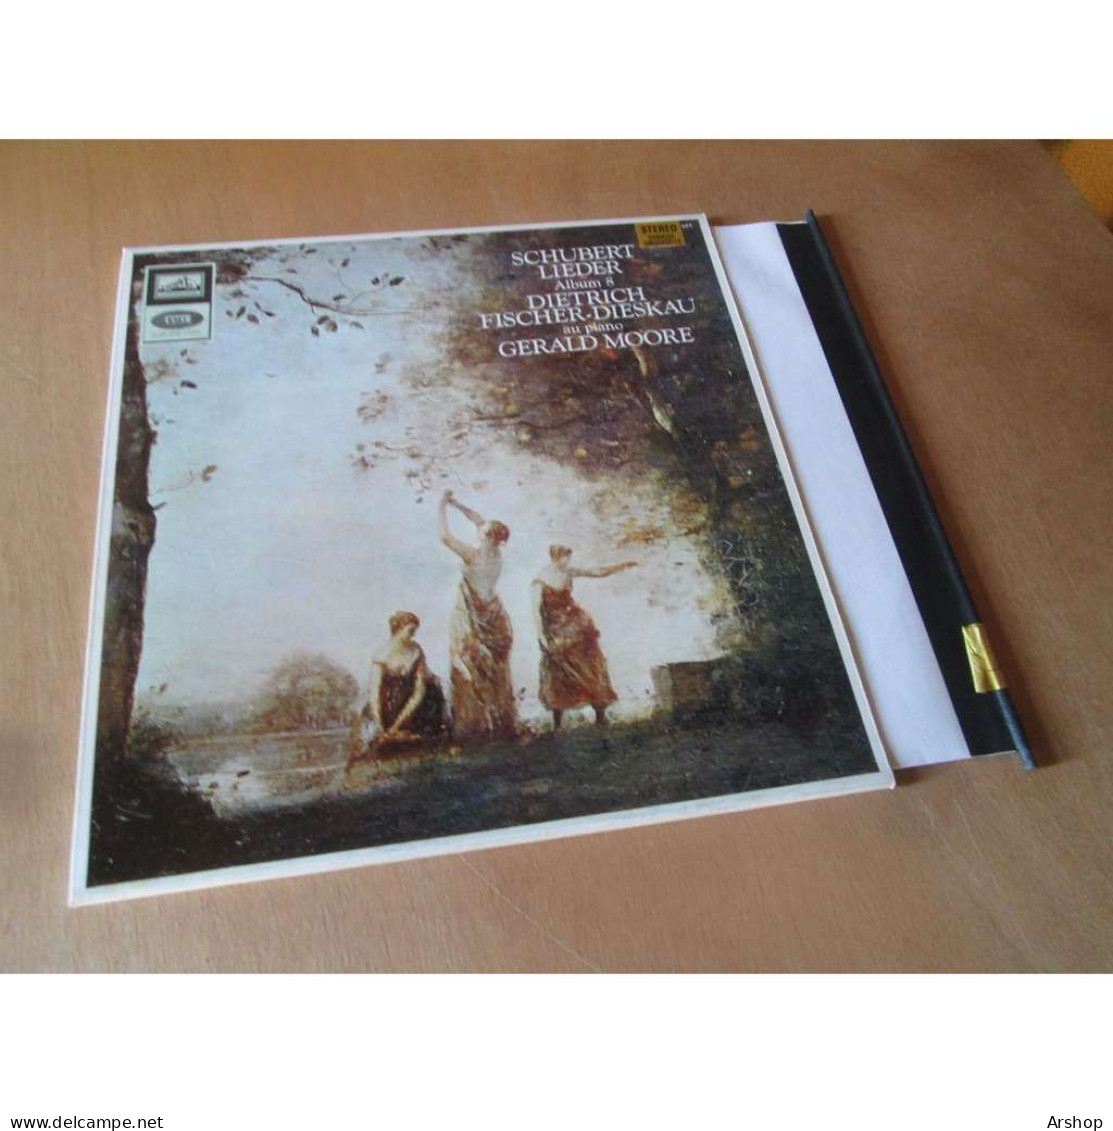 DIETRICH FISCHER-DIESKAU / GERALD MOORE - SCHUBERT Lieder – Album 8 - La Voix De Son Maitre CVA 885 France - Classica